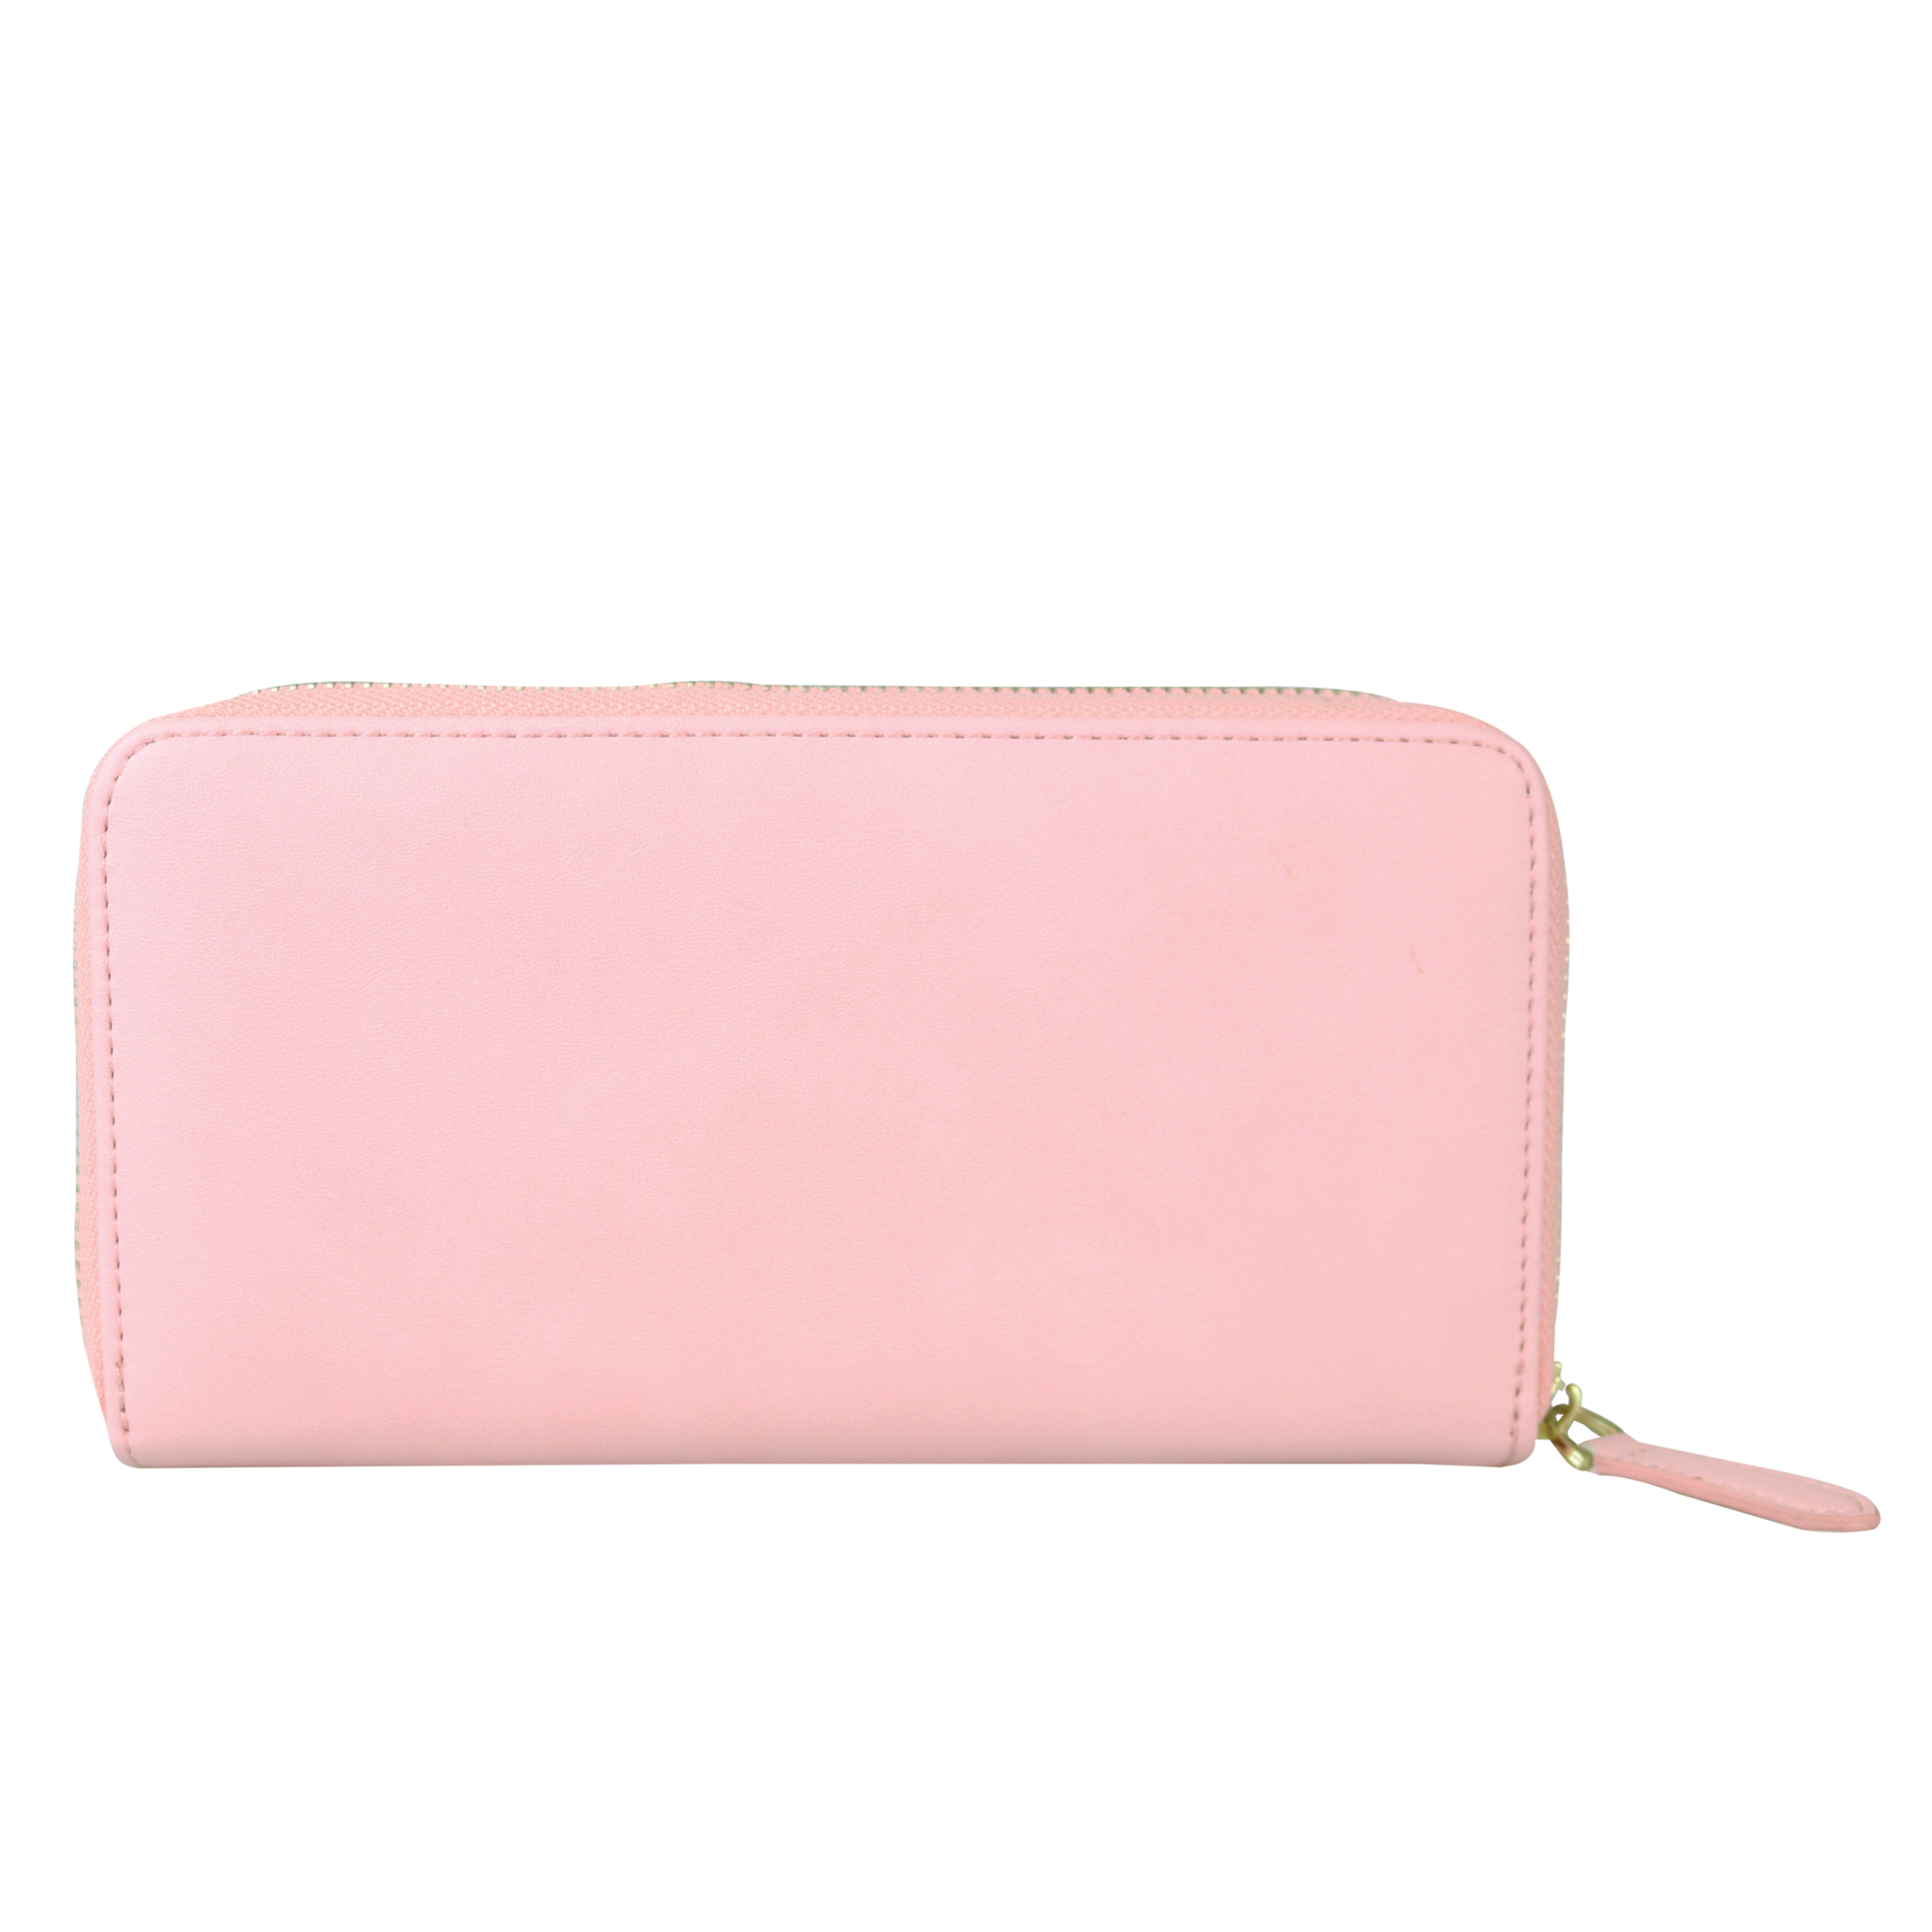 Light pink wallet - Wicked Sista | Cosmetic Bags, Jewellery, Hair ...